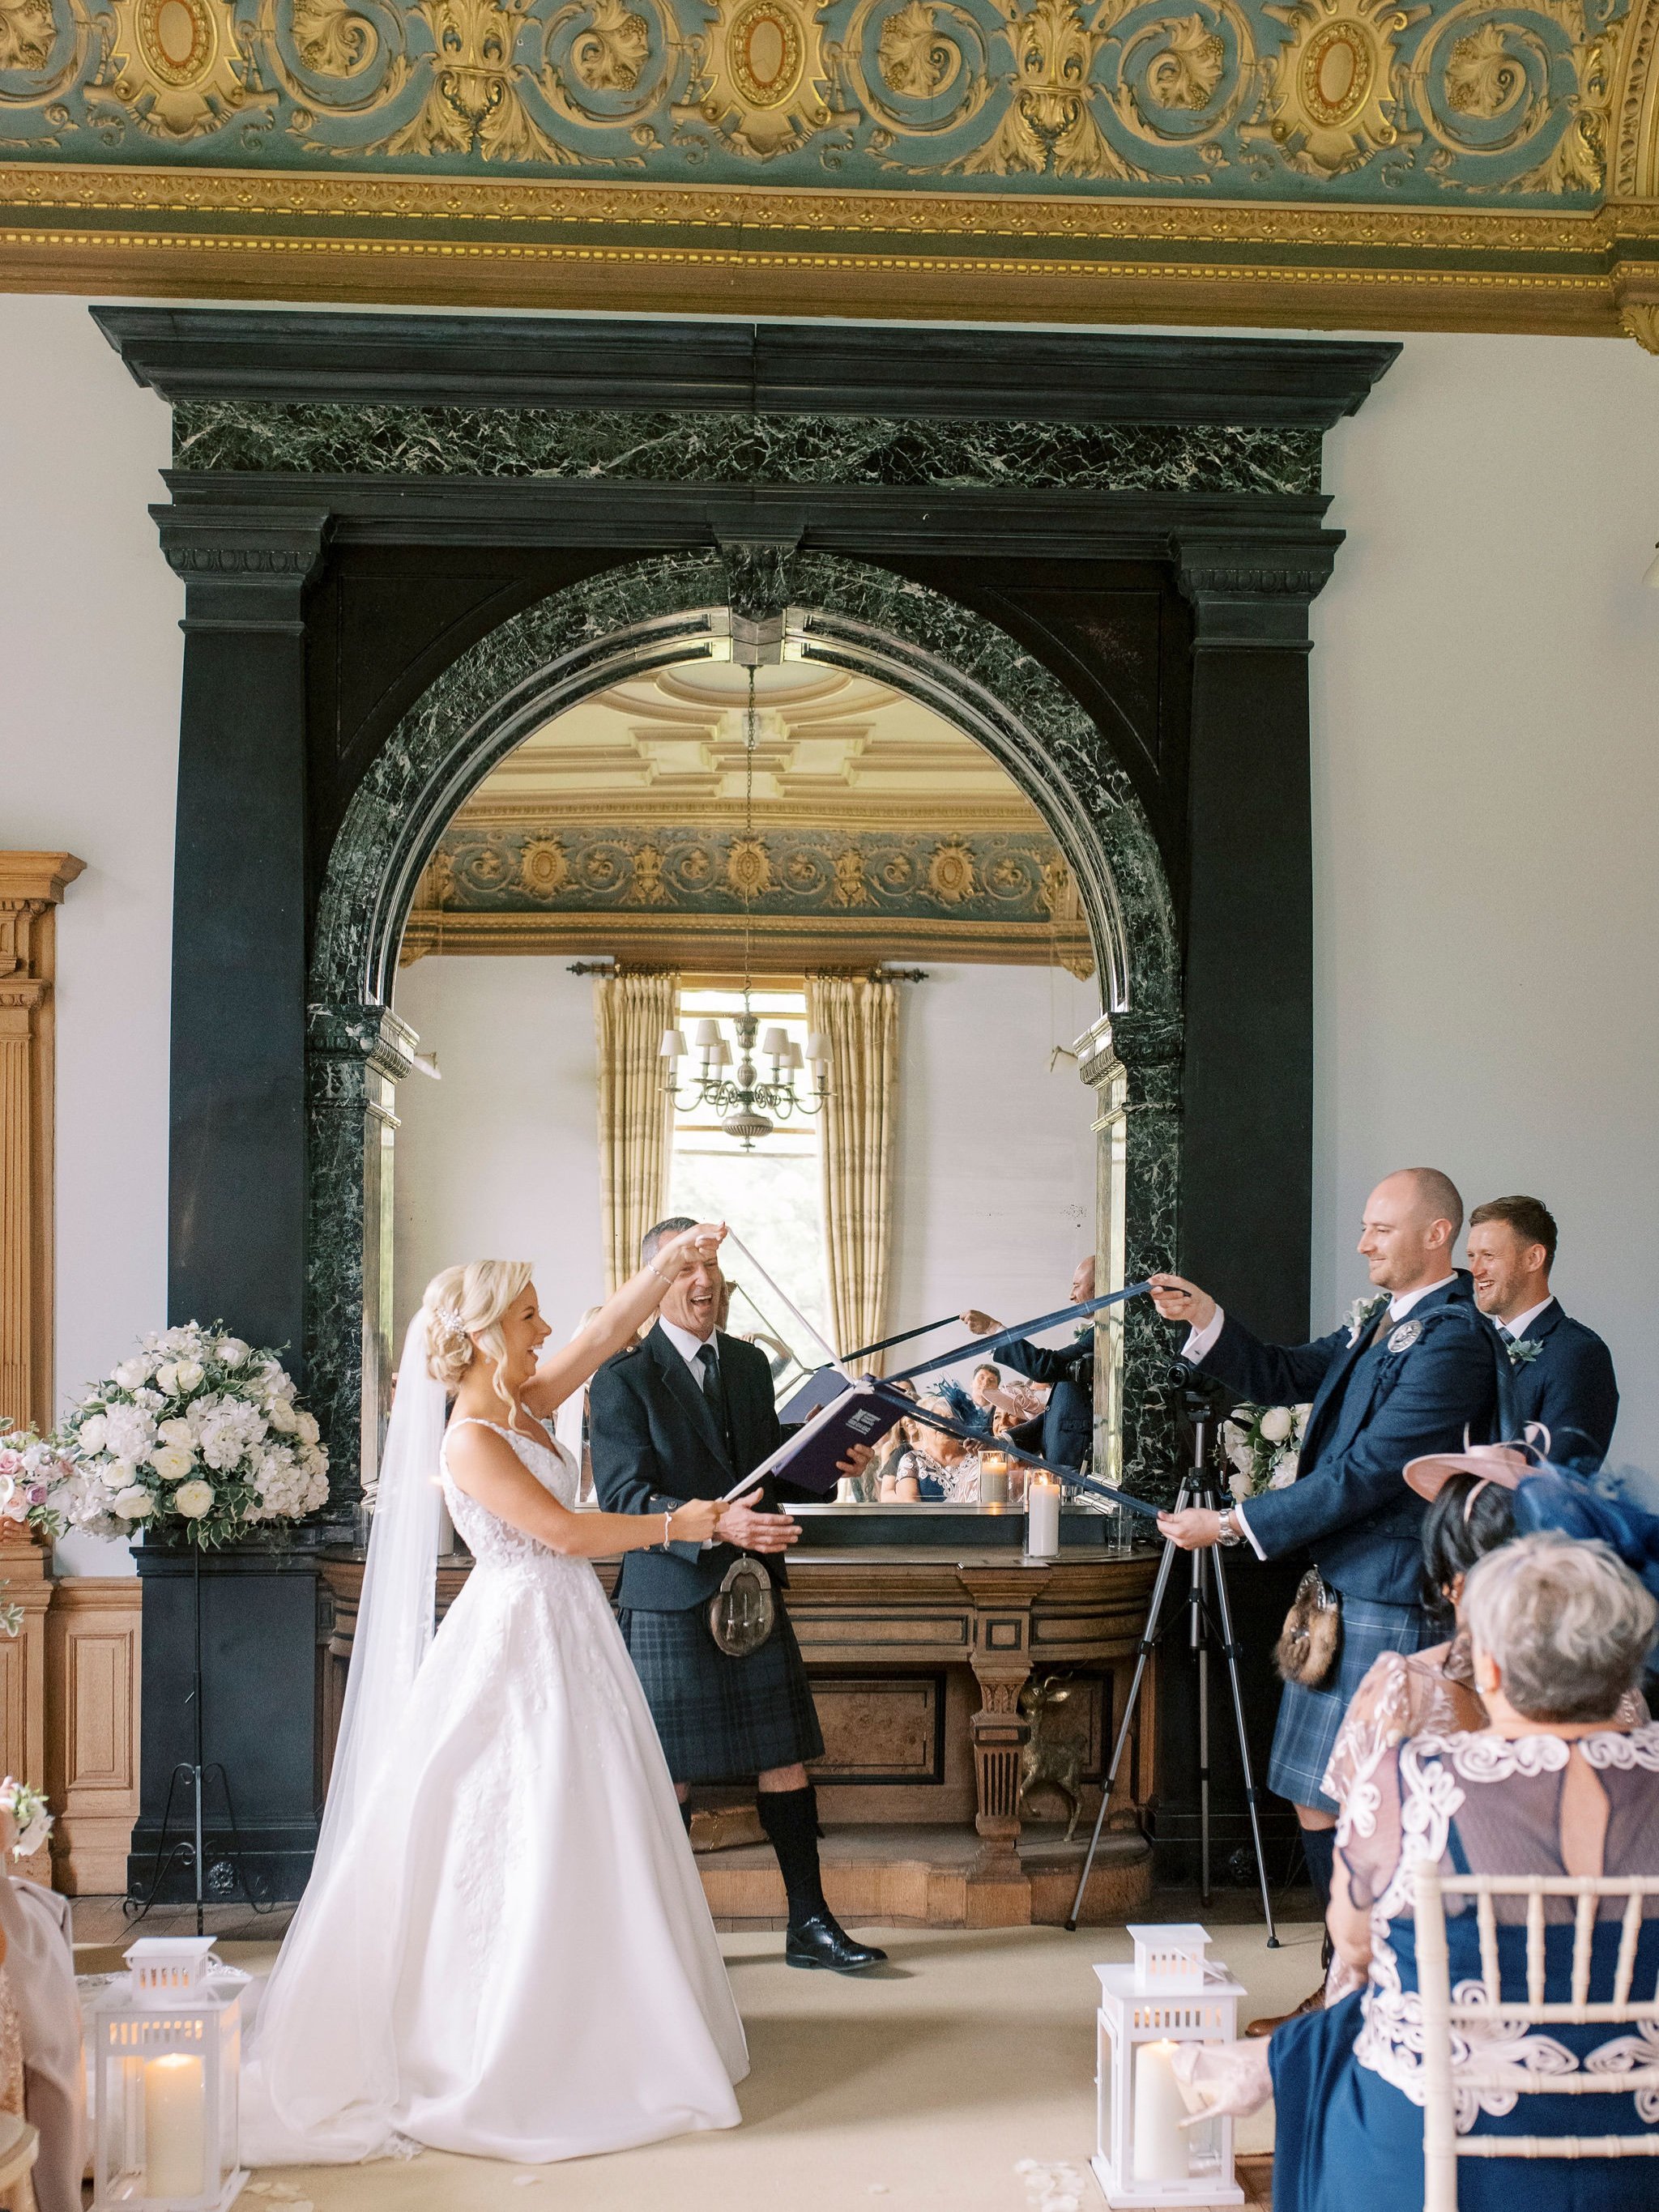 25_springkell-house-wedding-photographer-dumfries-scotland-handfasting-tieing-the-knot.jpg